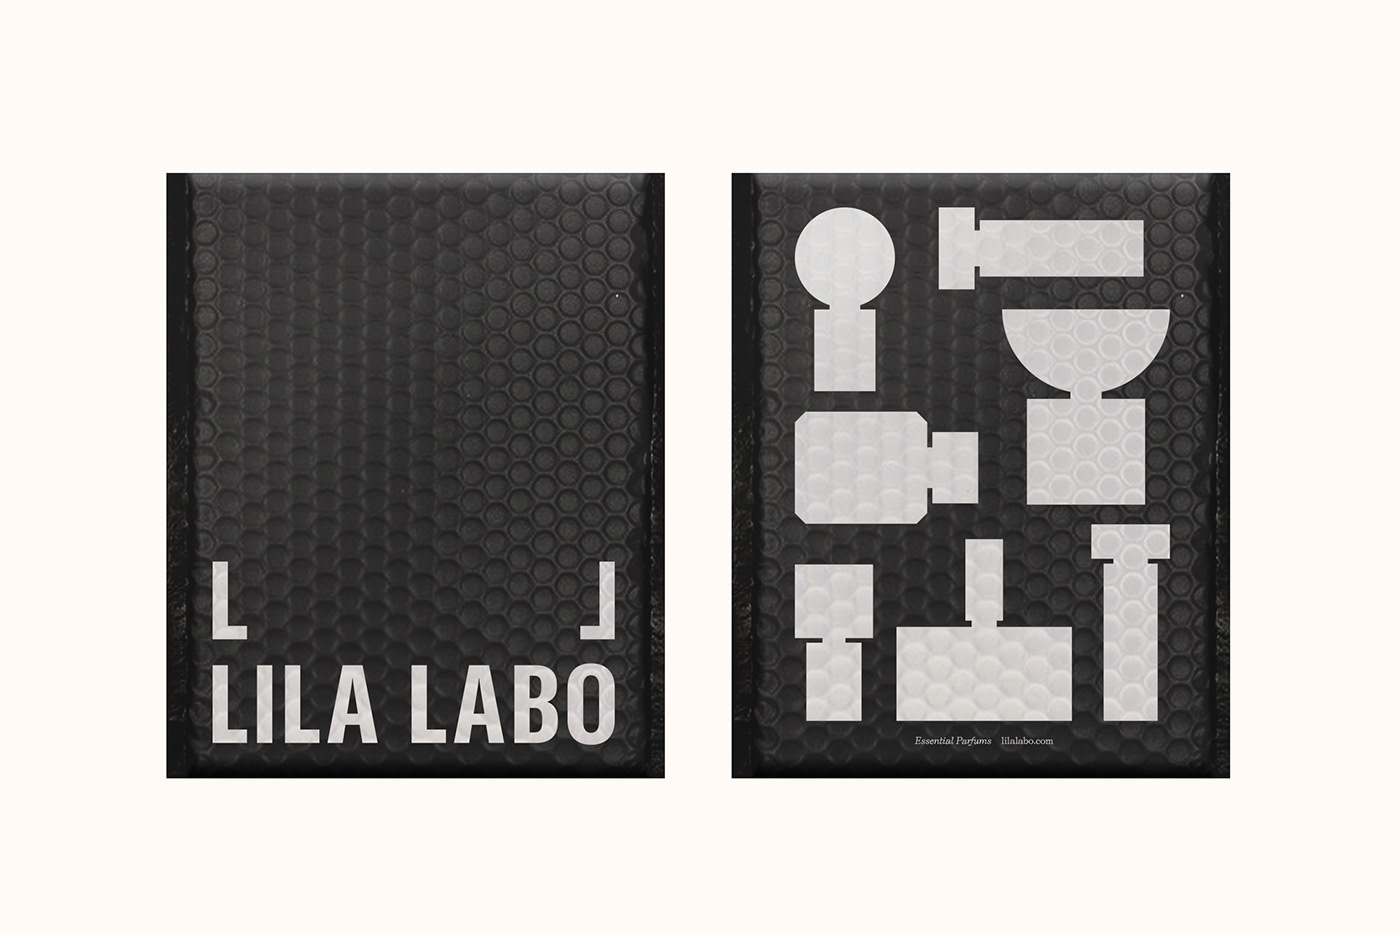 Lila Labo极简优雅的品牌设计